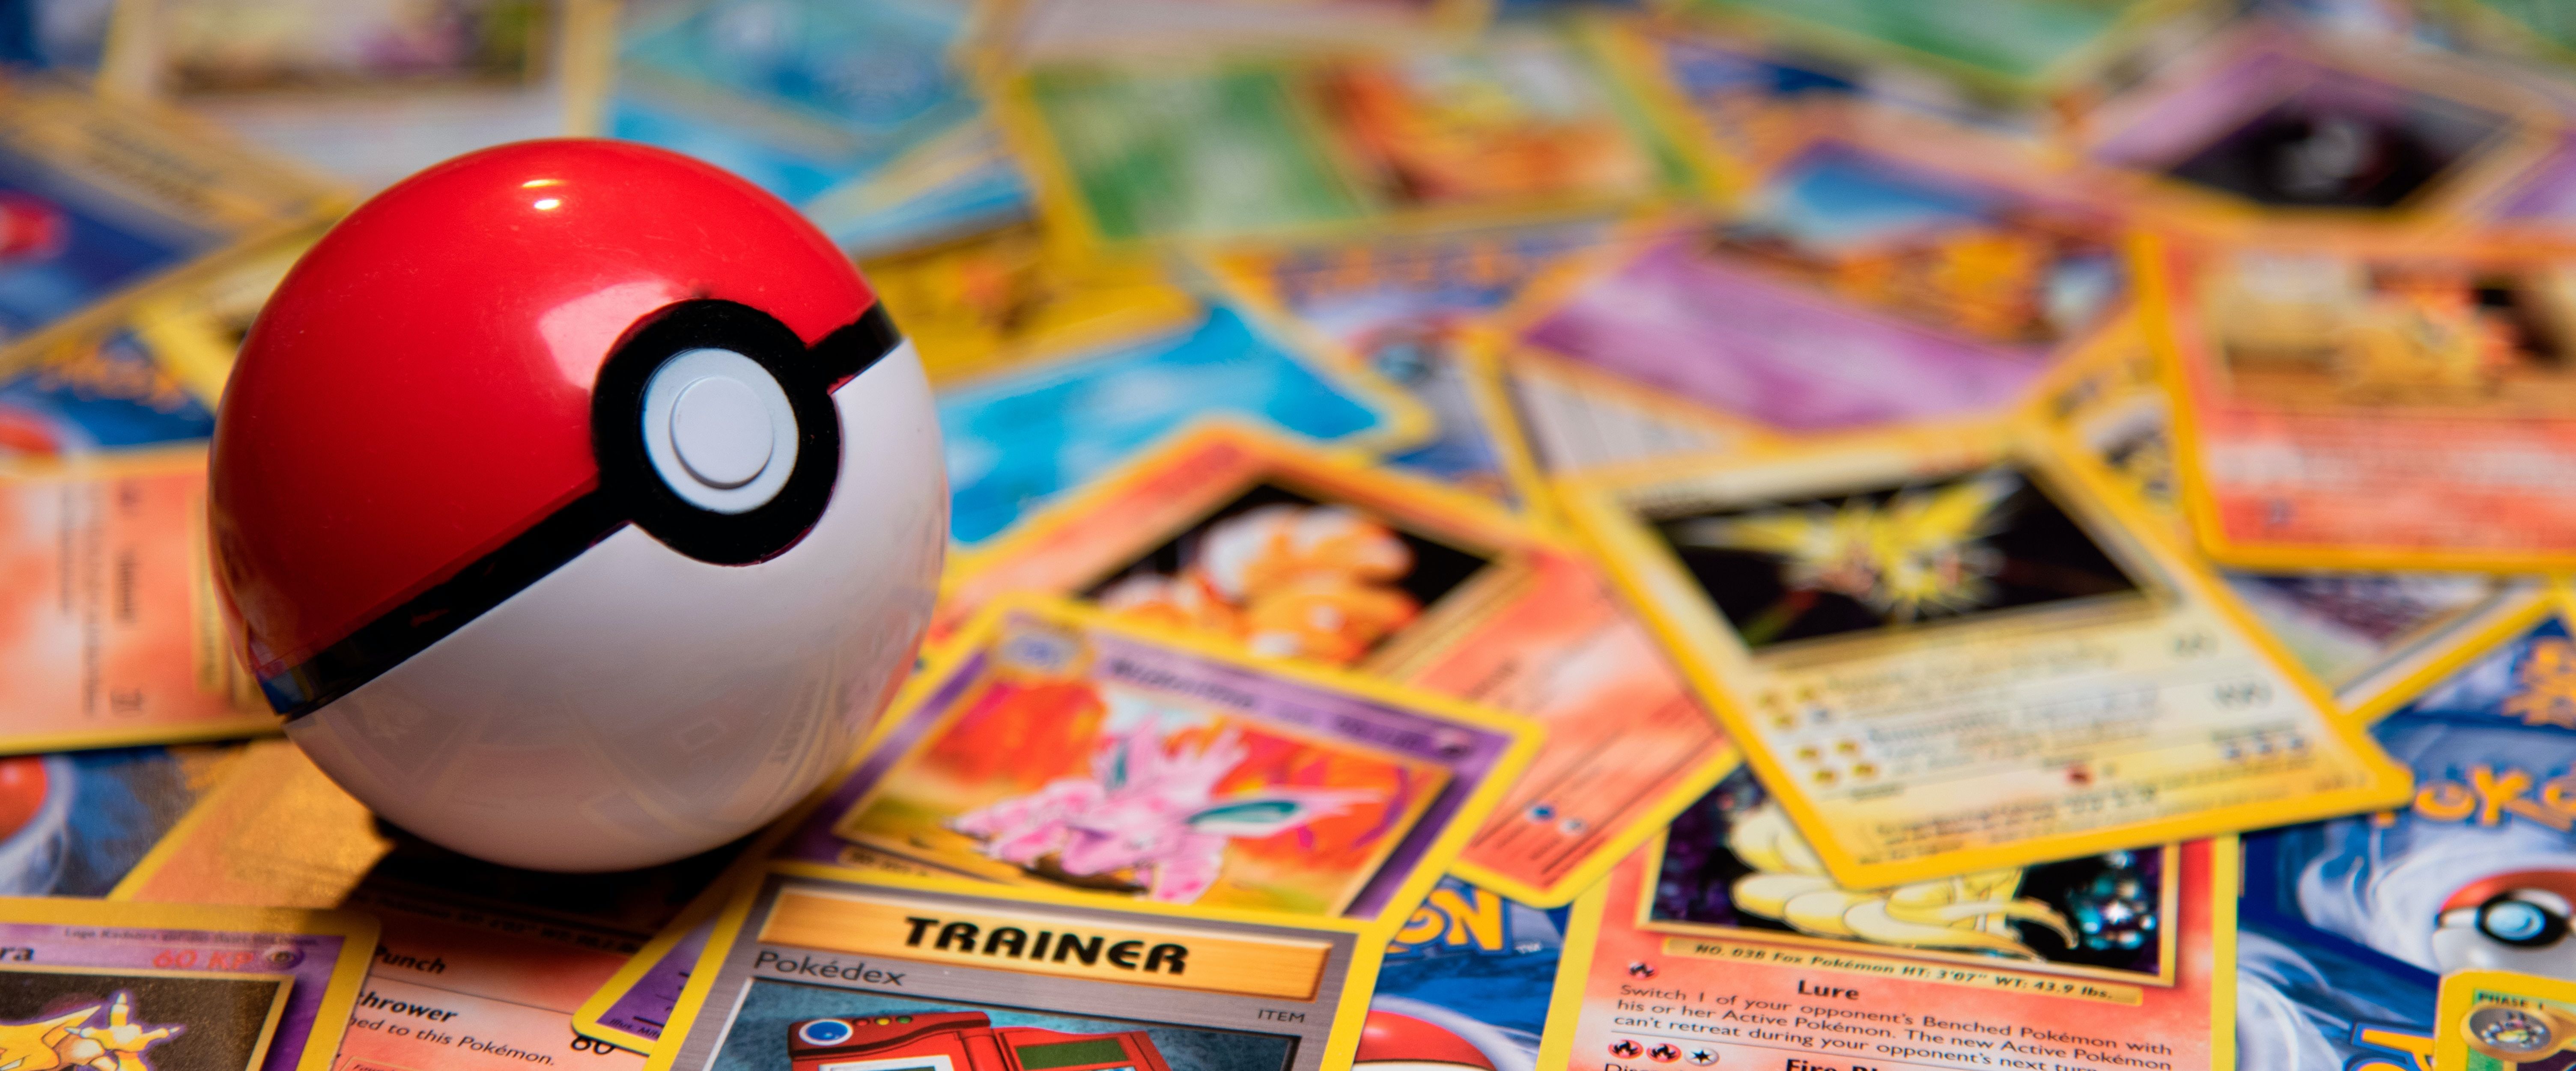 Is Pokémon Ready for Web3? The Pokémon Company Seeks Web3 Expert in New Job Listing